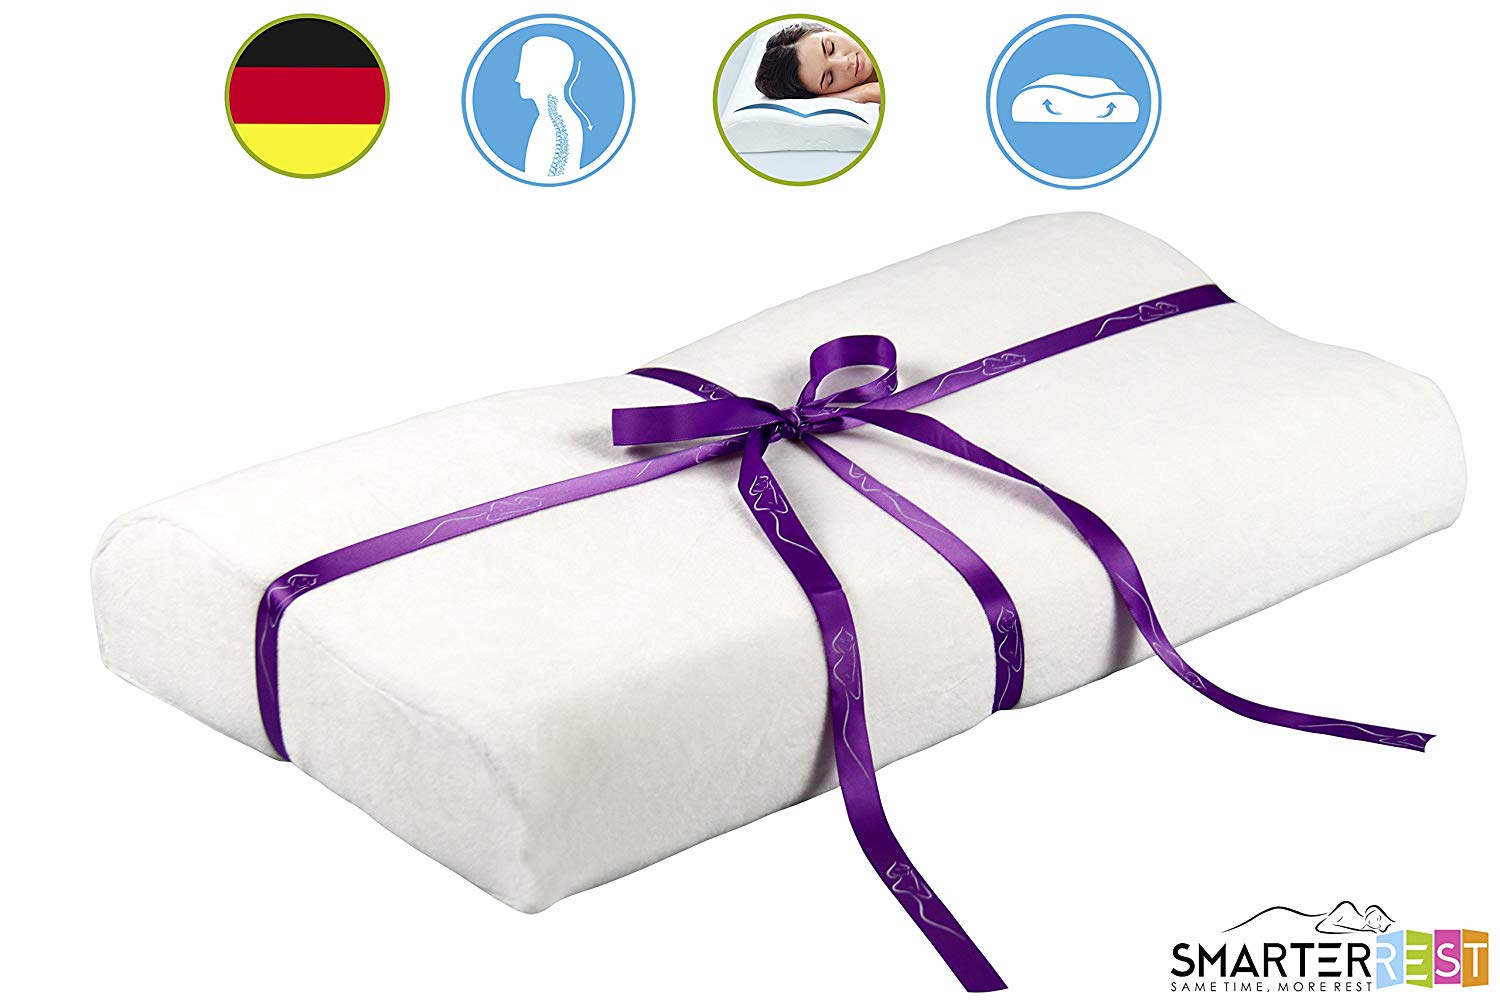 Memory Foam pillow from Smarter Rest